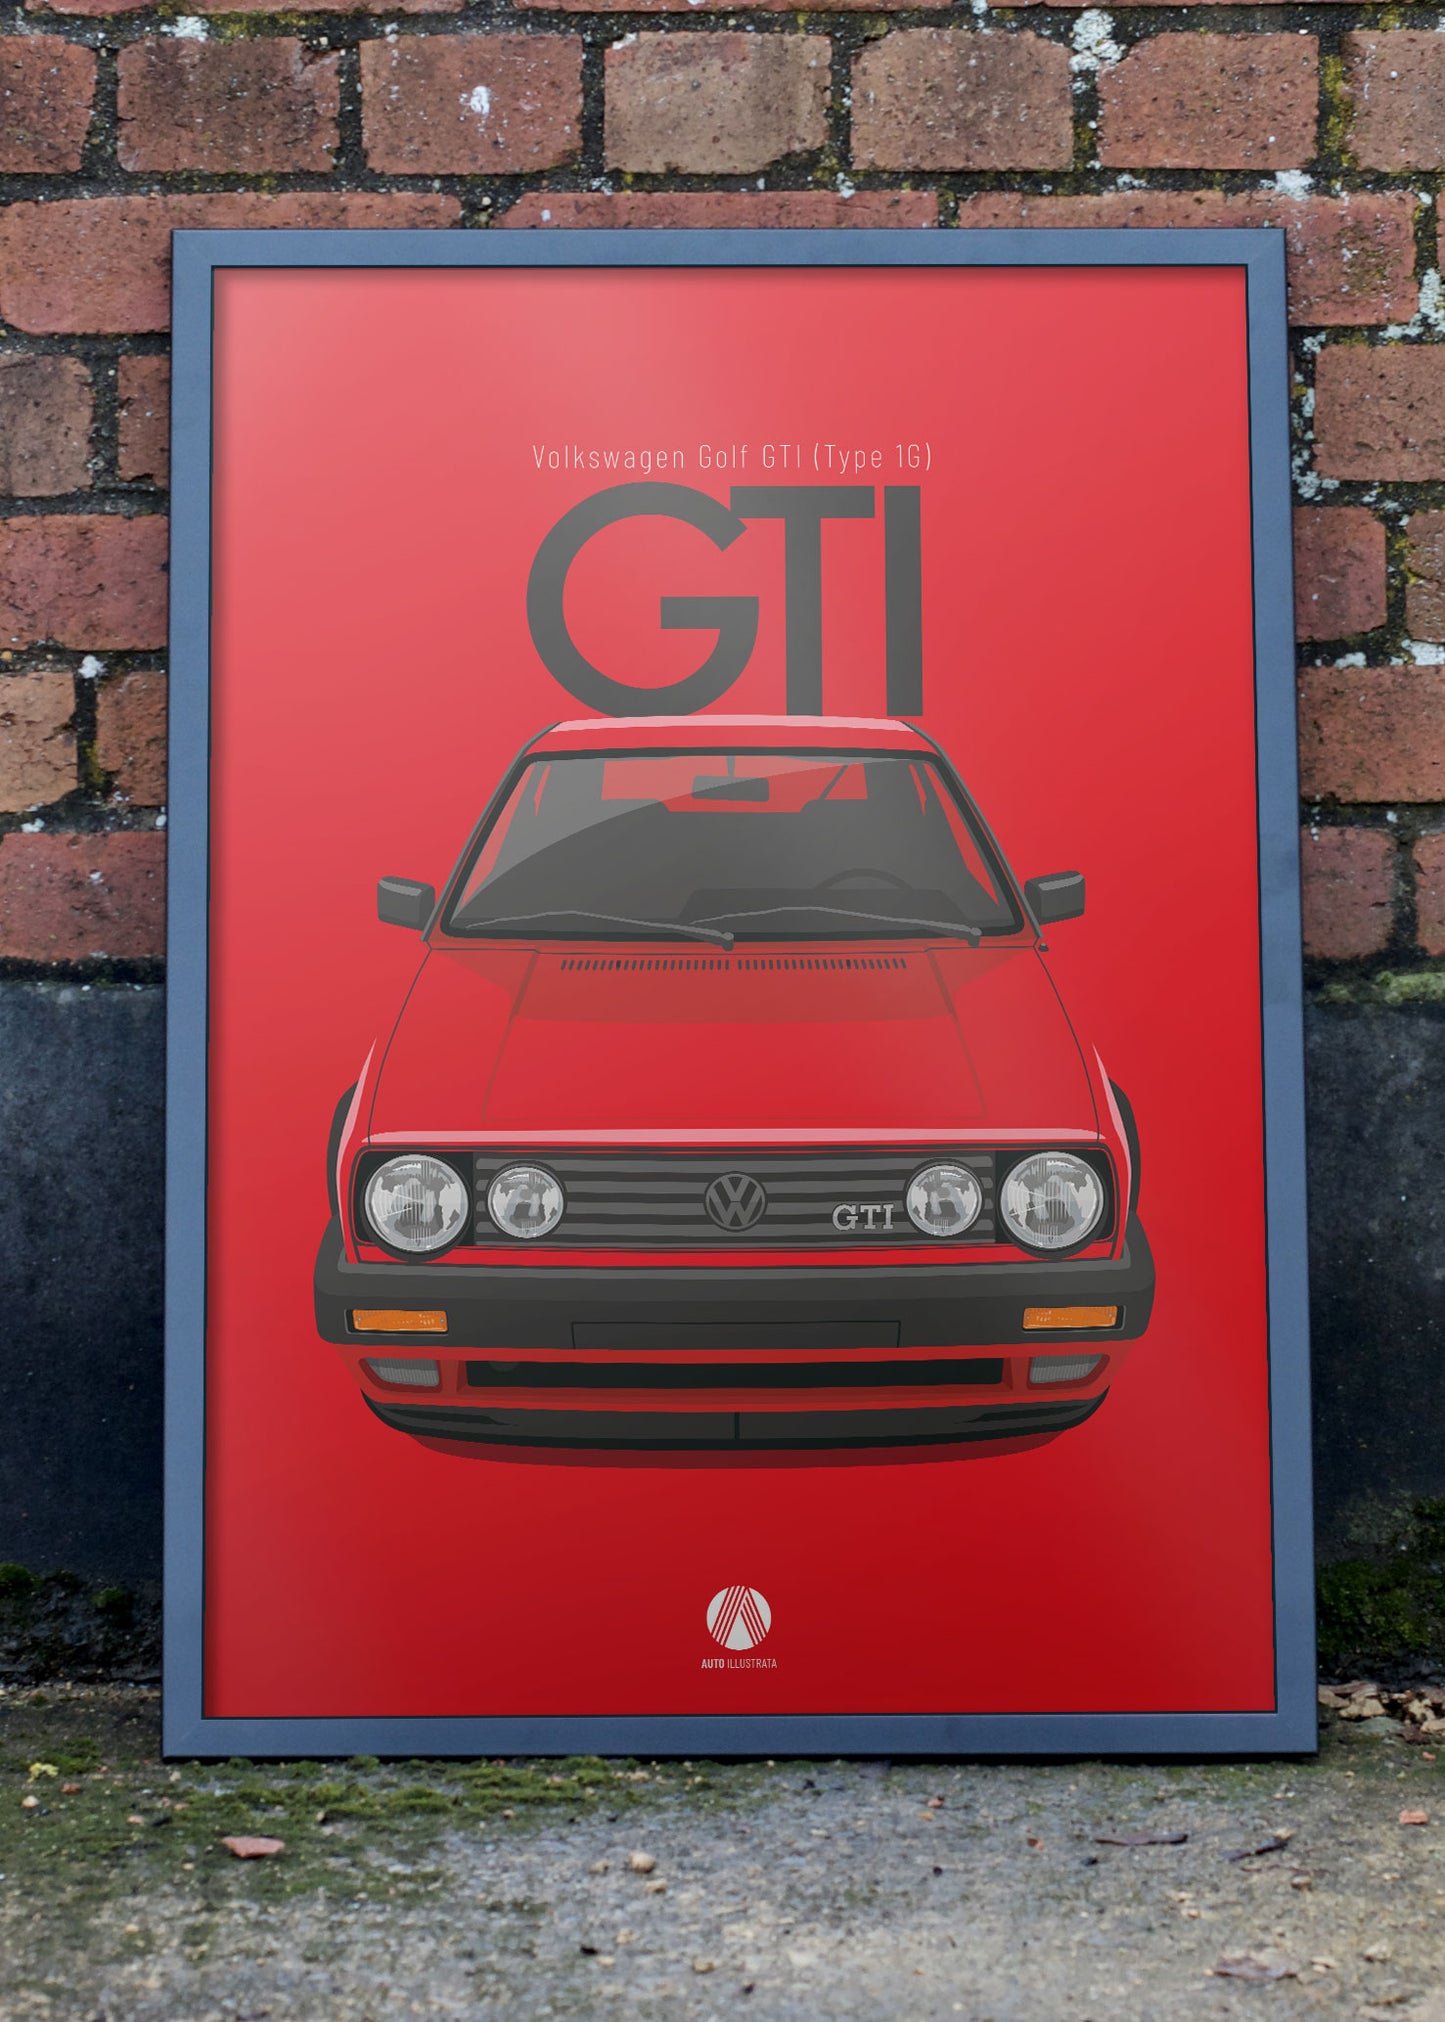 1991 Volkswagen Golf GTI (Mk2) - Mars Red - poster print